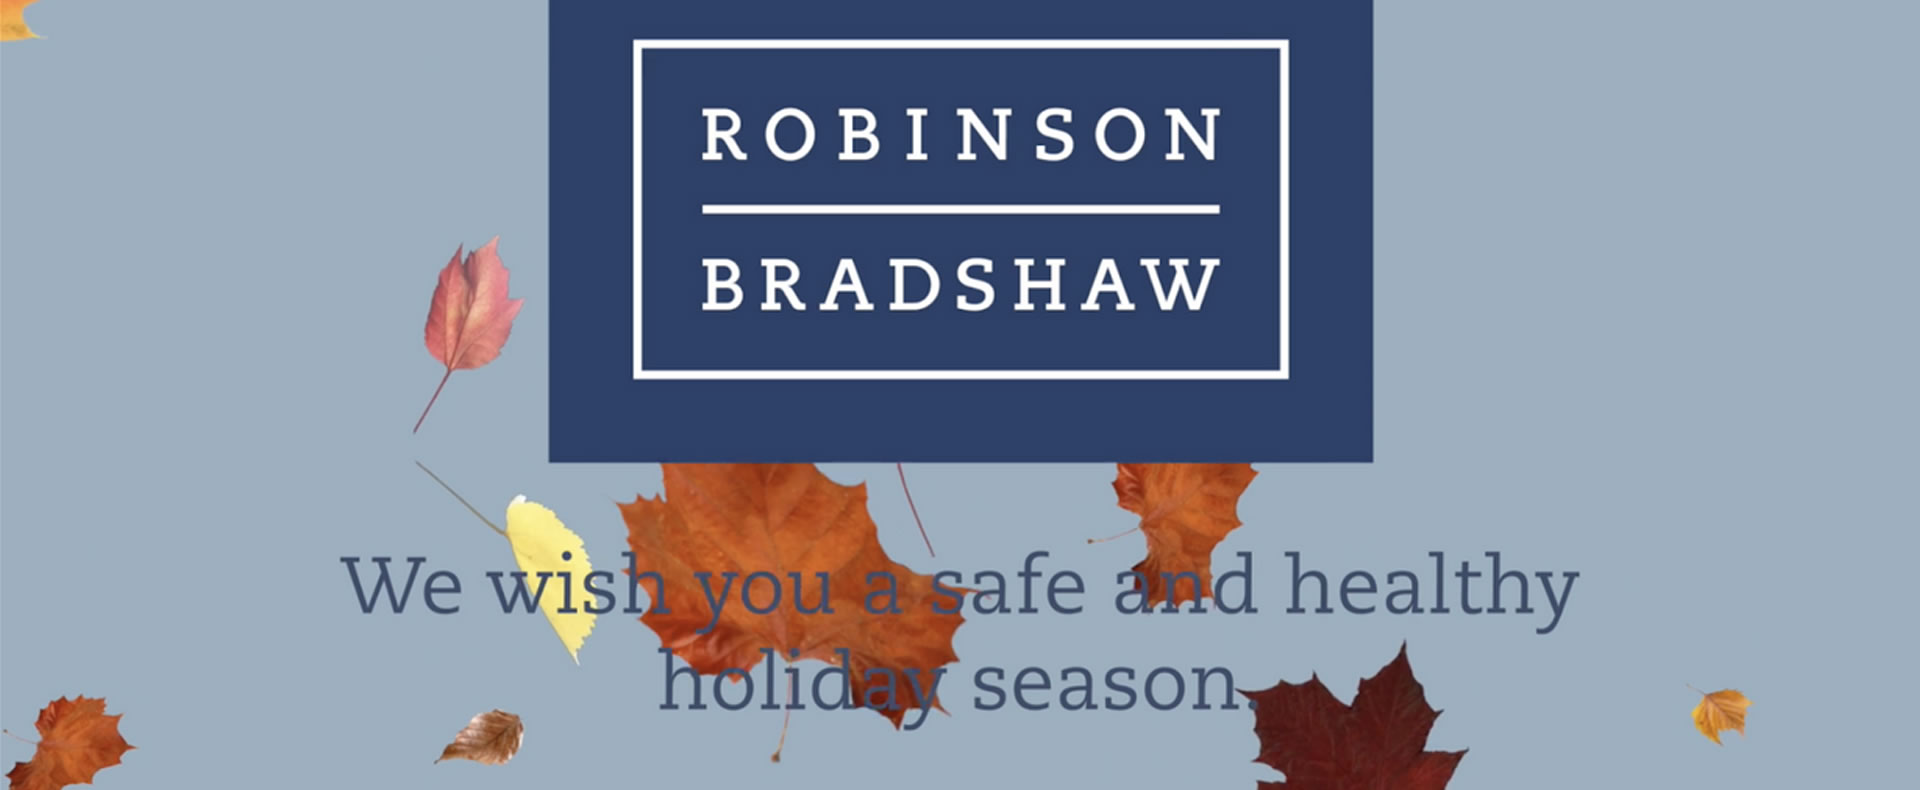 Robinson Bradshaw Holiday Card